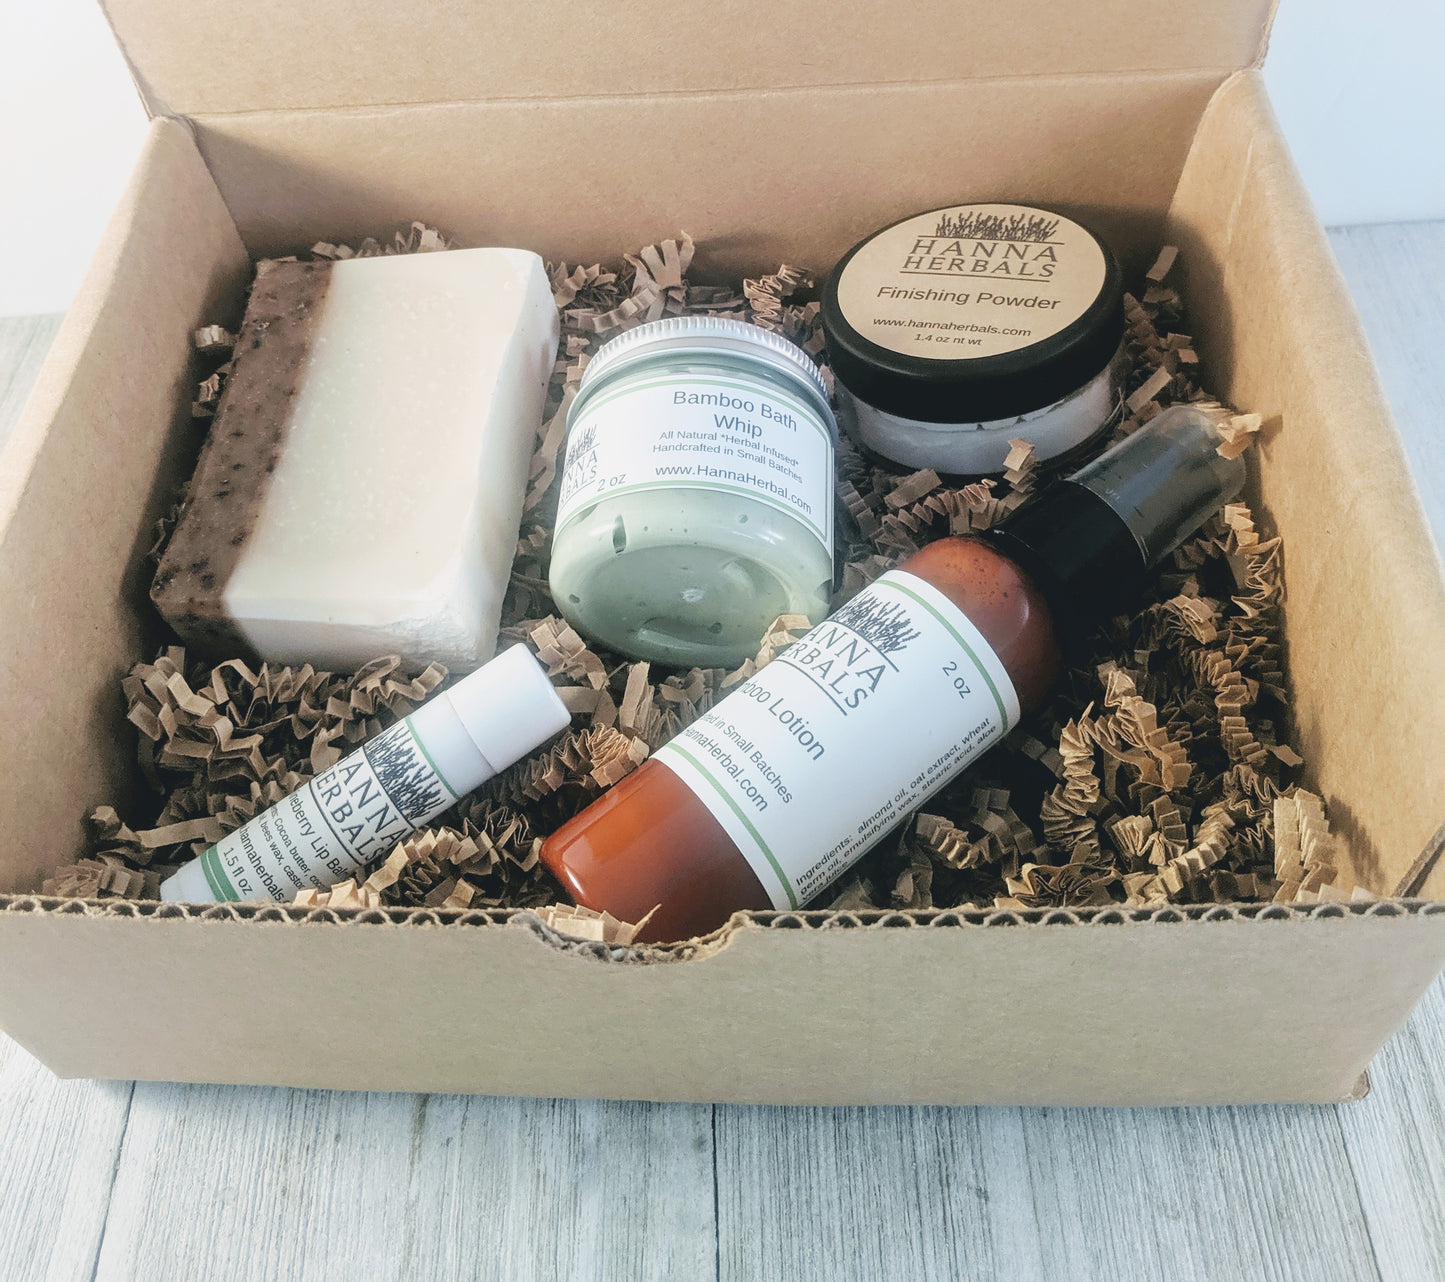 Skin Care Subscription Box - Hanna Herbals